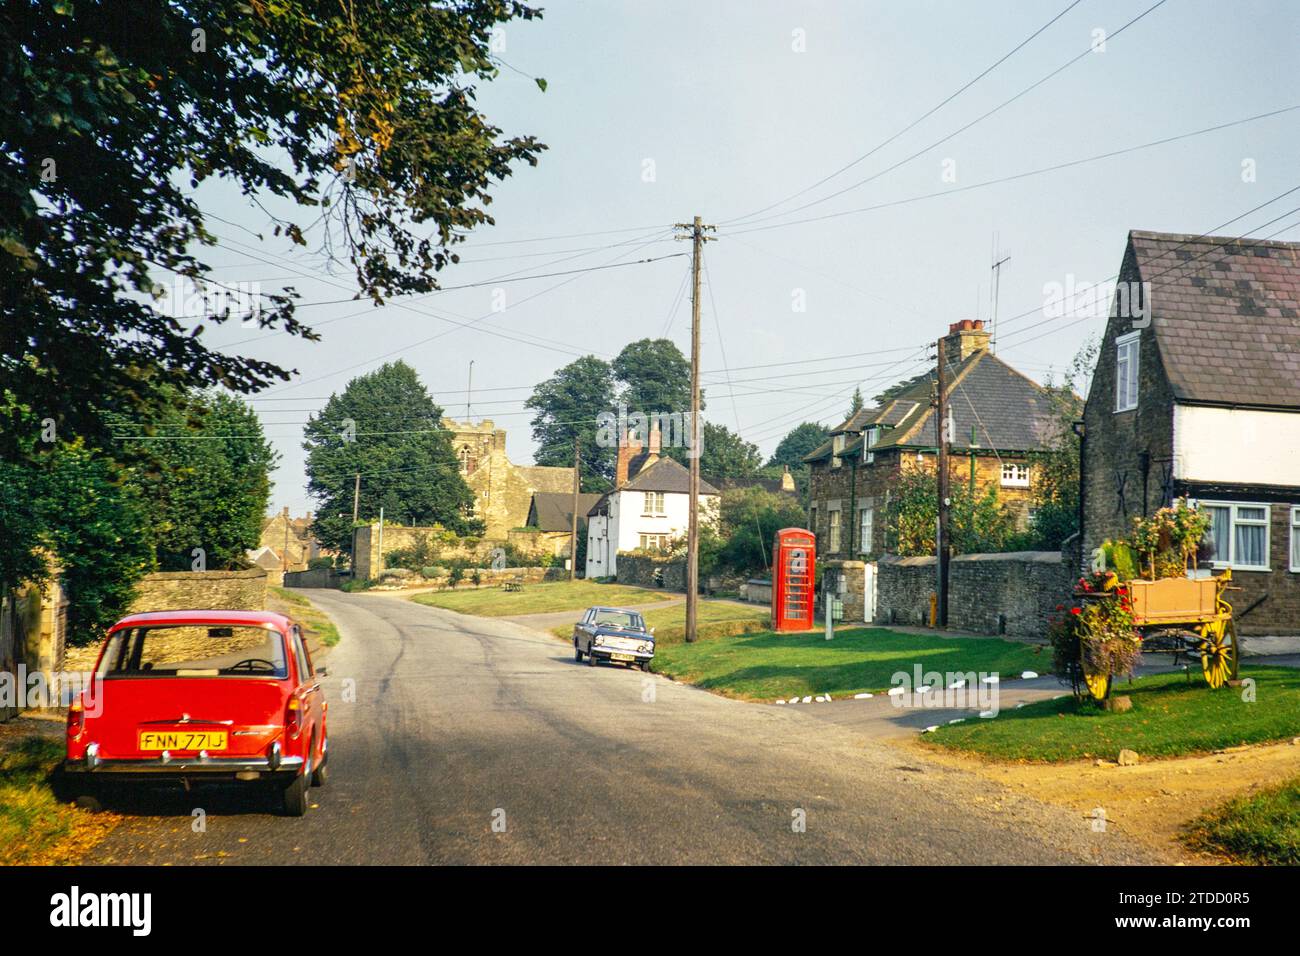 Village street, Wing, Rutland, England, UK August 1972 Red Austin Morris 1100 Mk 2 car Stock Photo